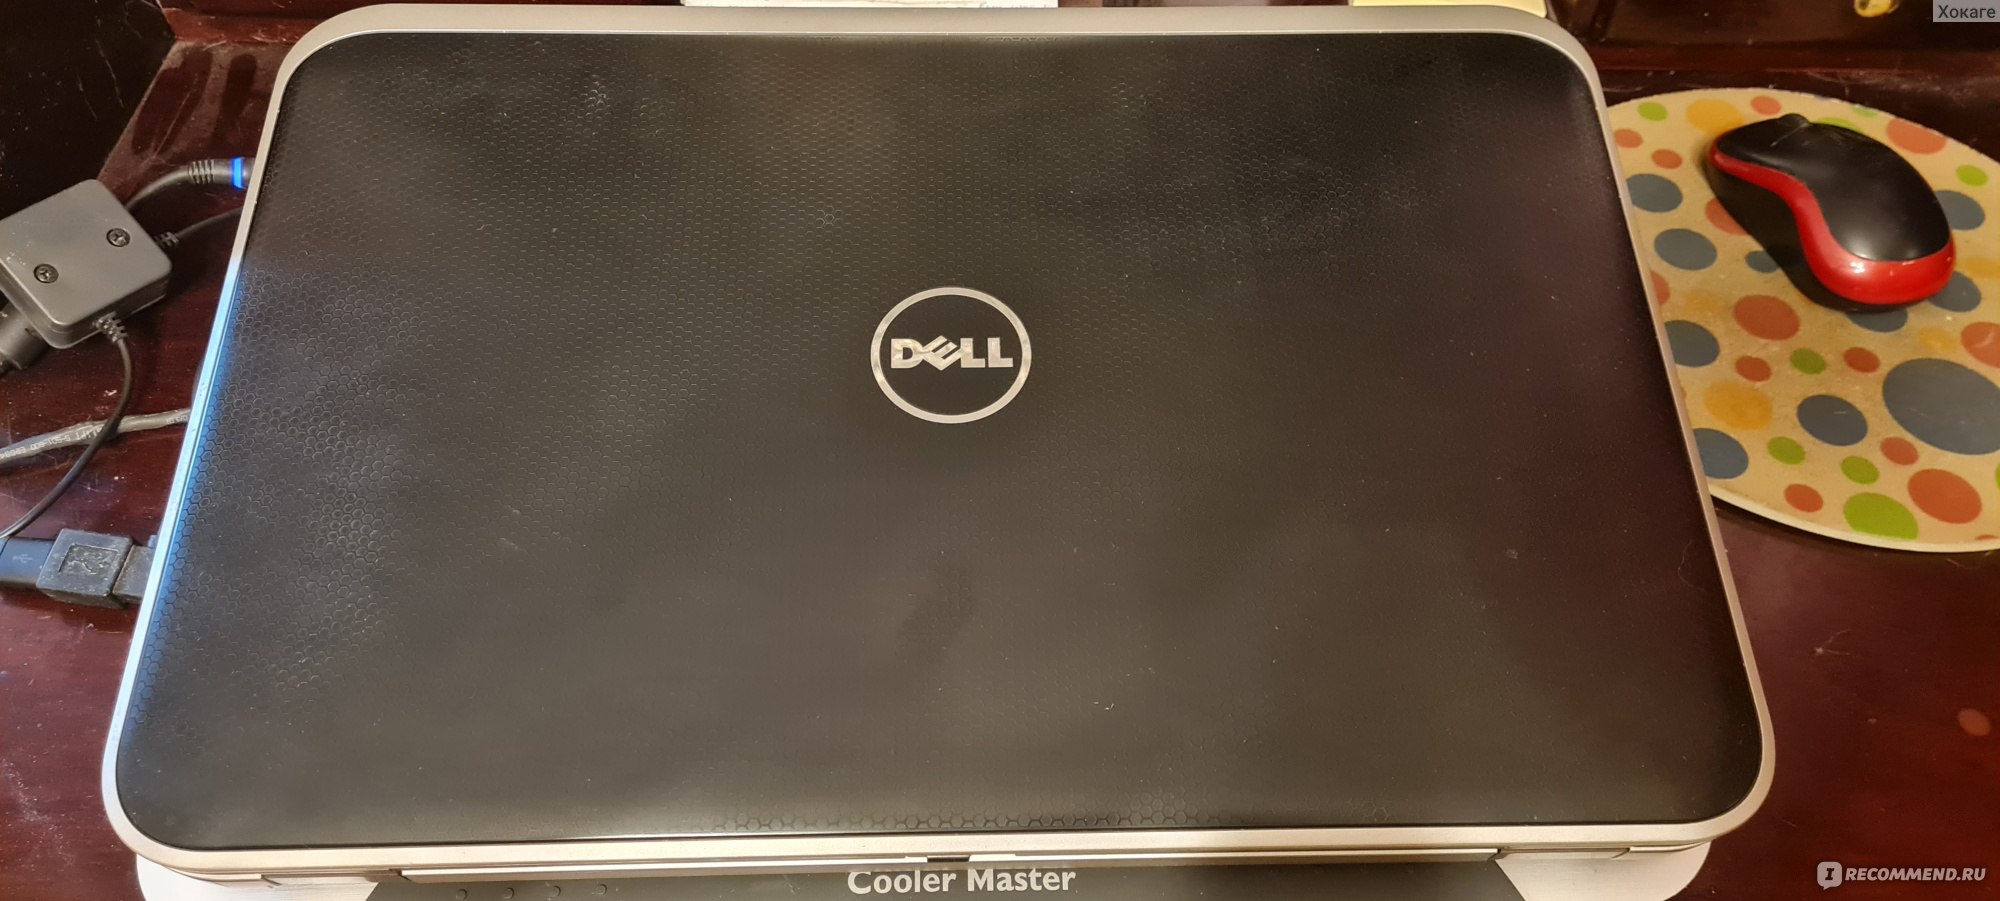 Ноутбук Dell Inspiron 7720 Отзывы